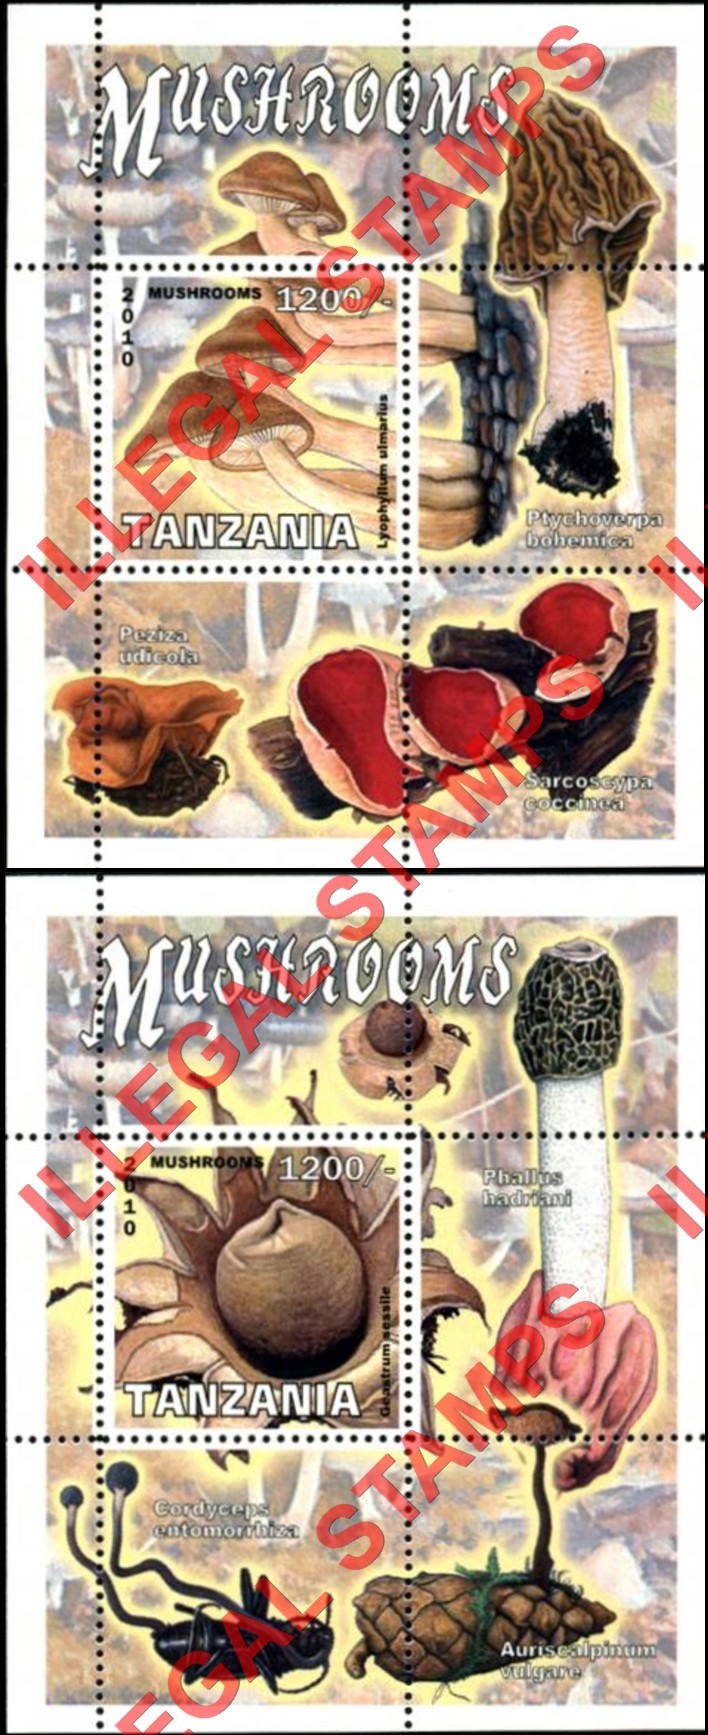 Tanzania 2010 Mushrooms Illegal Stamp Souvenir Sheets of 1